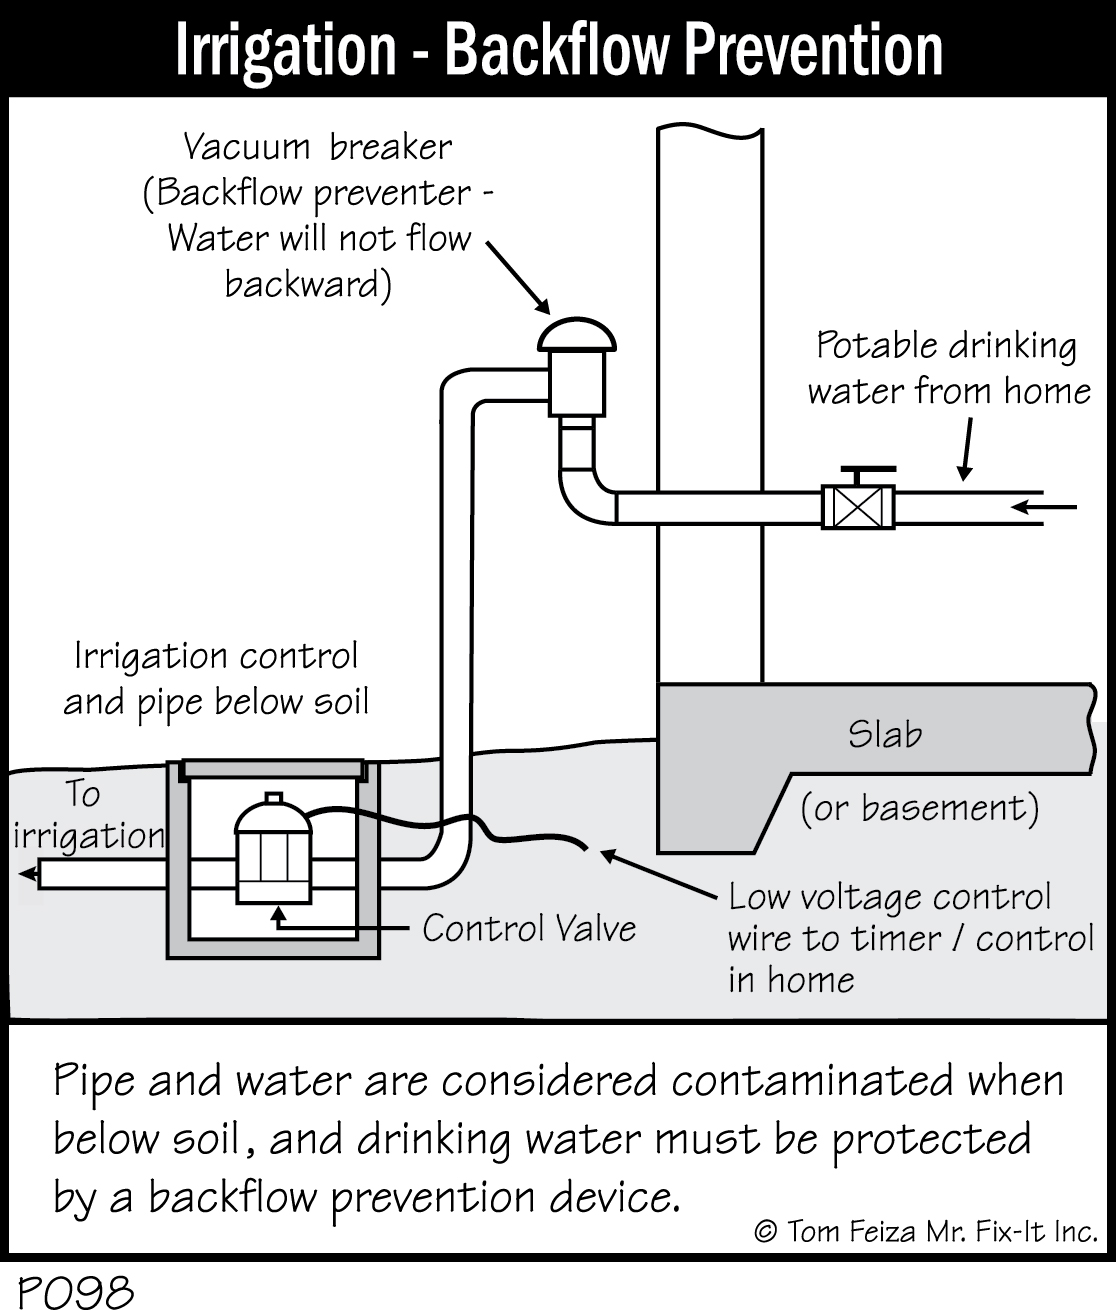 P098 - Irrigation - Backflow Prevention